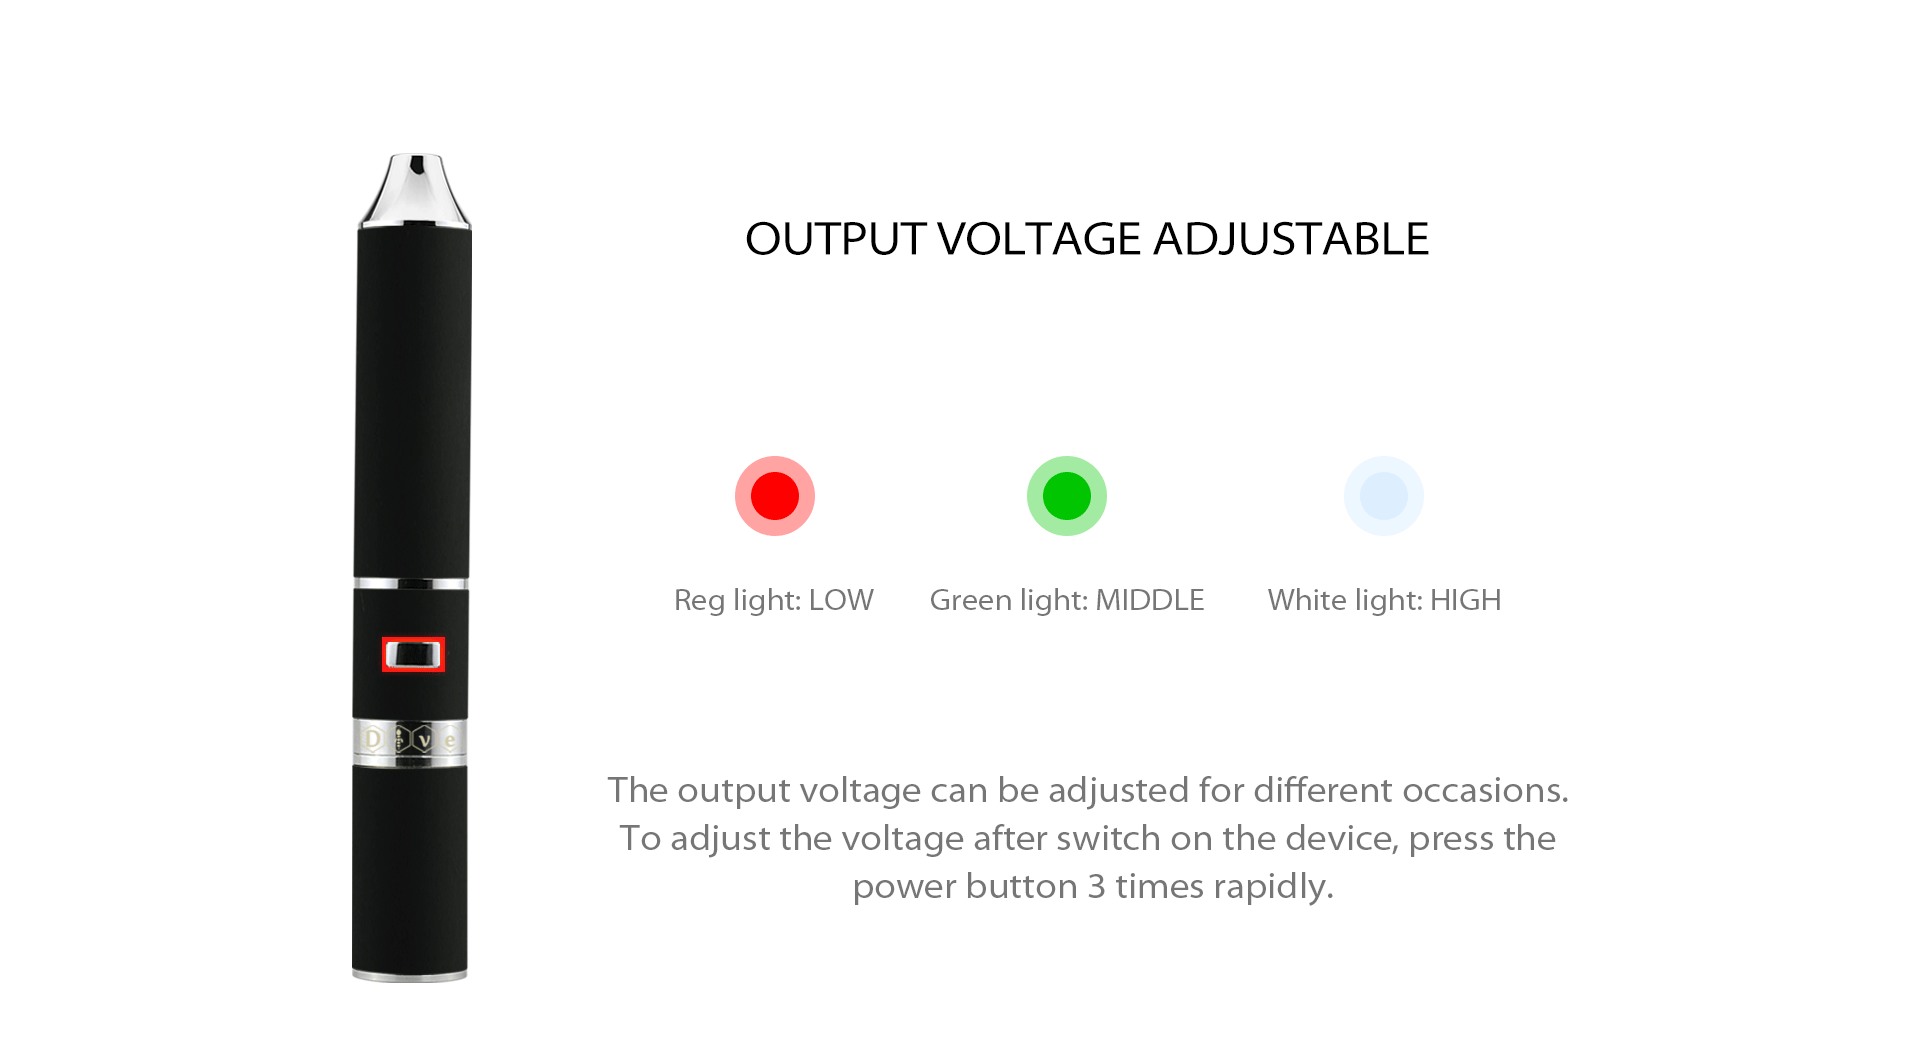 Yocan Dive output voltage adjustable. 3 Voltage Levels: High - White Light, Medium - Green Light, Low - Red Light;